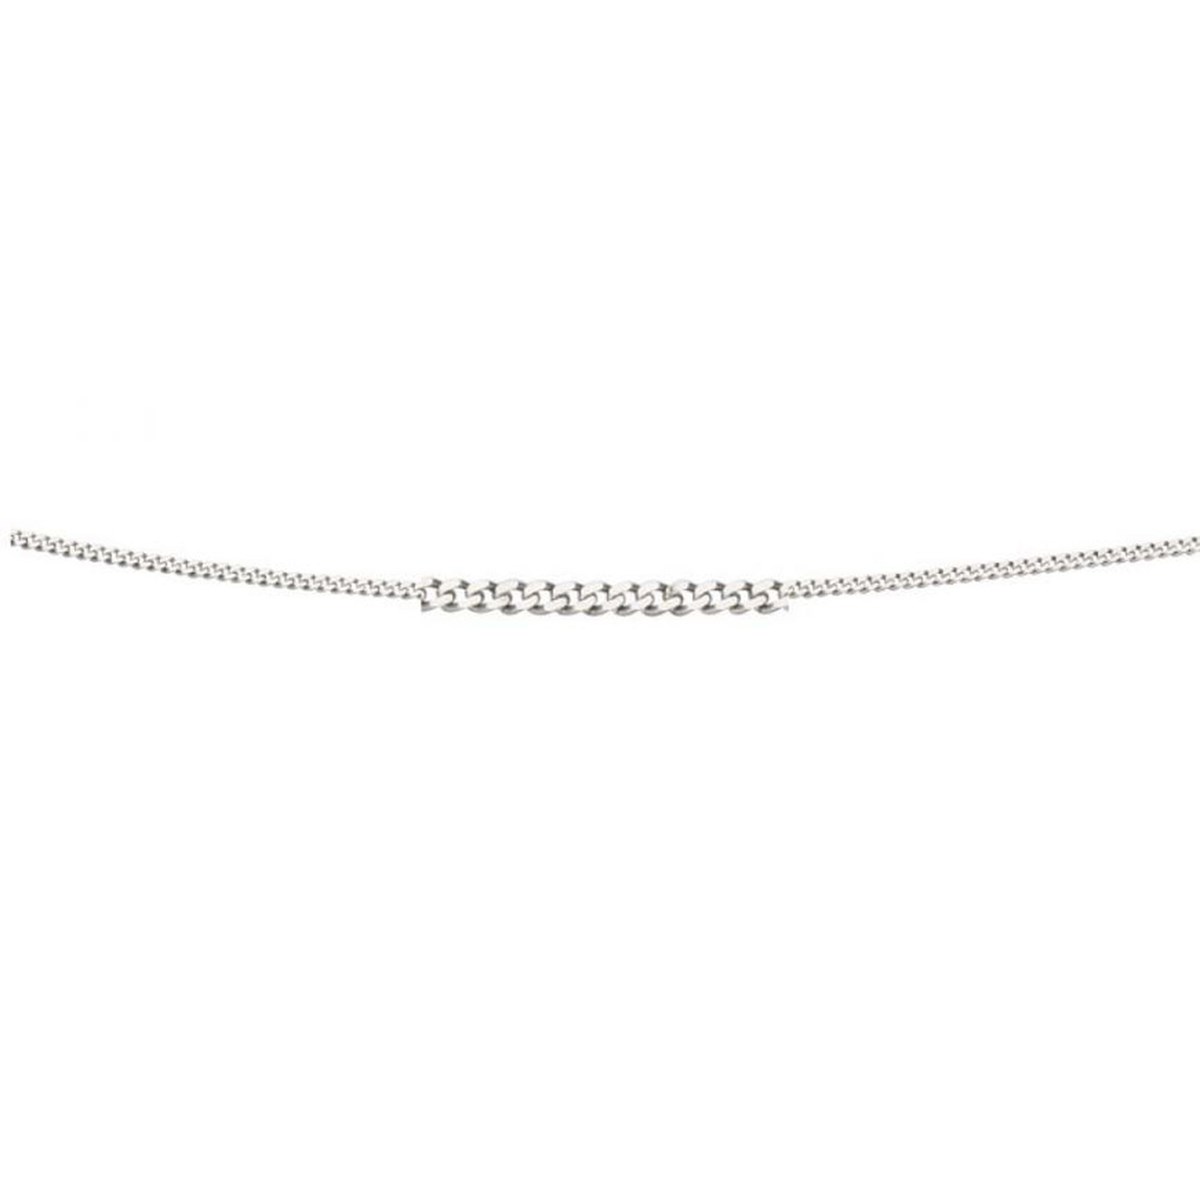 Collier phir - diamant -  Chaine en Or 375 de 41cm - Pendentif en Or blanc 375/1000 - vue 2